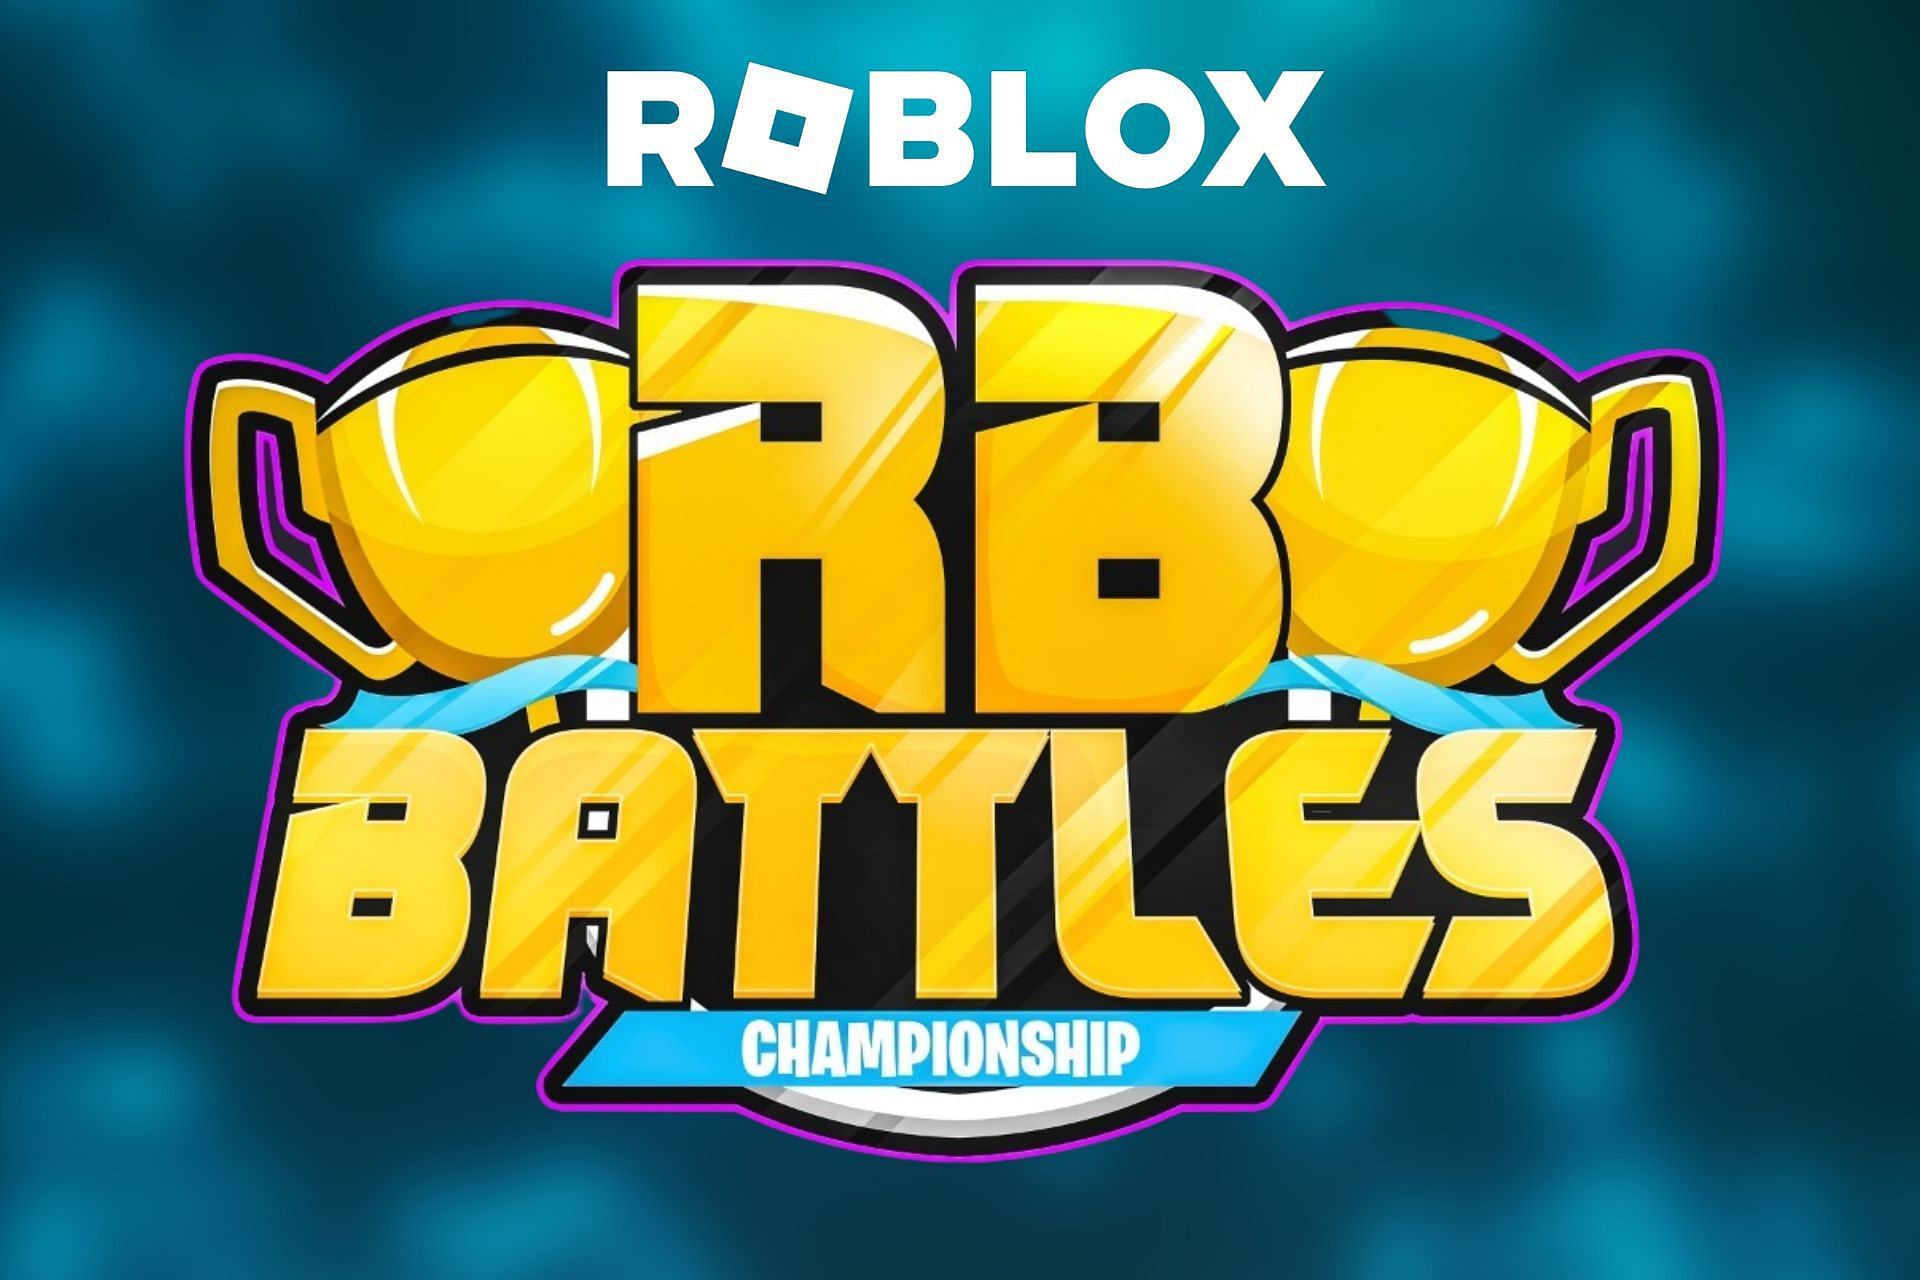 Featured image of RB Battles Championship (Image via Sportskeeda)